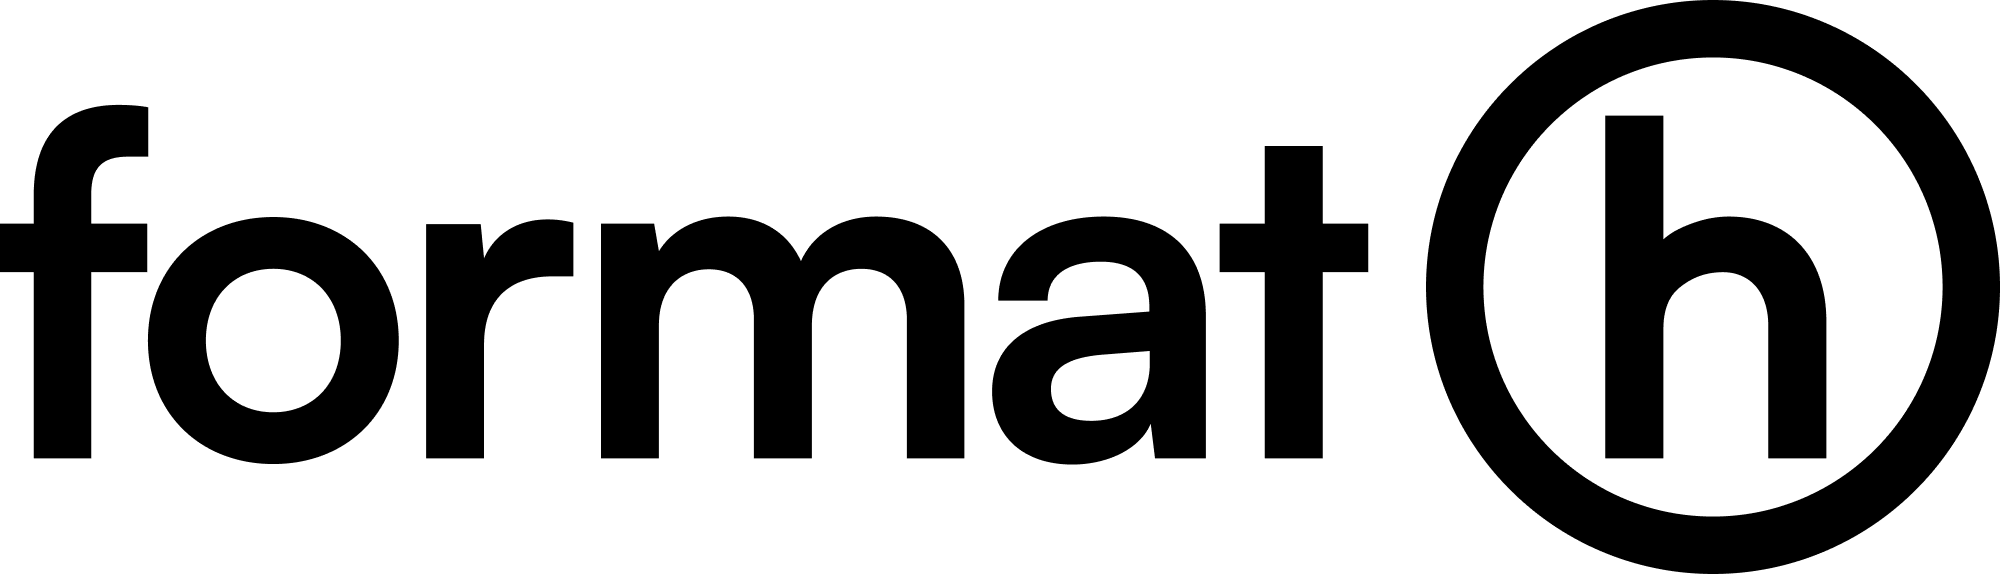 format h digital GmbH logo